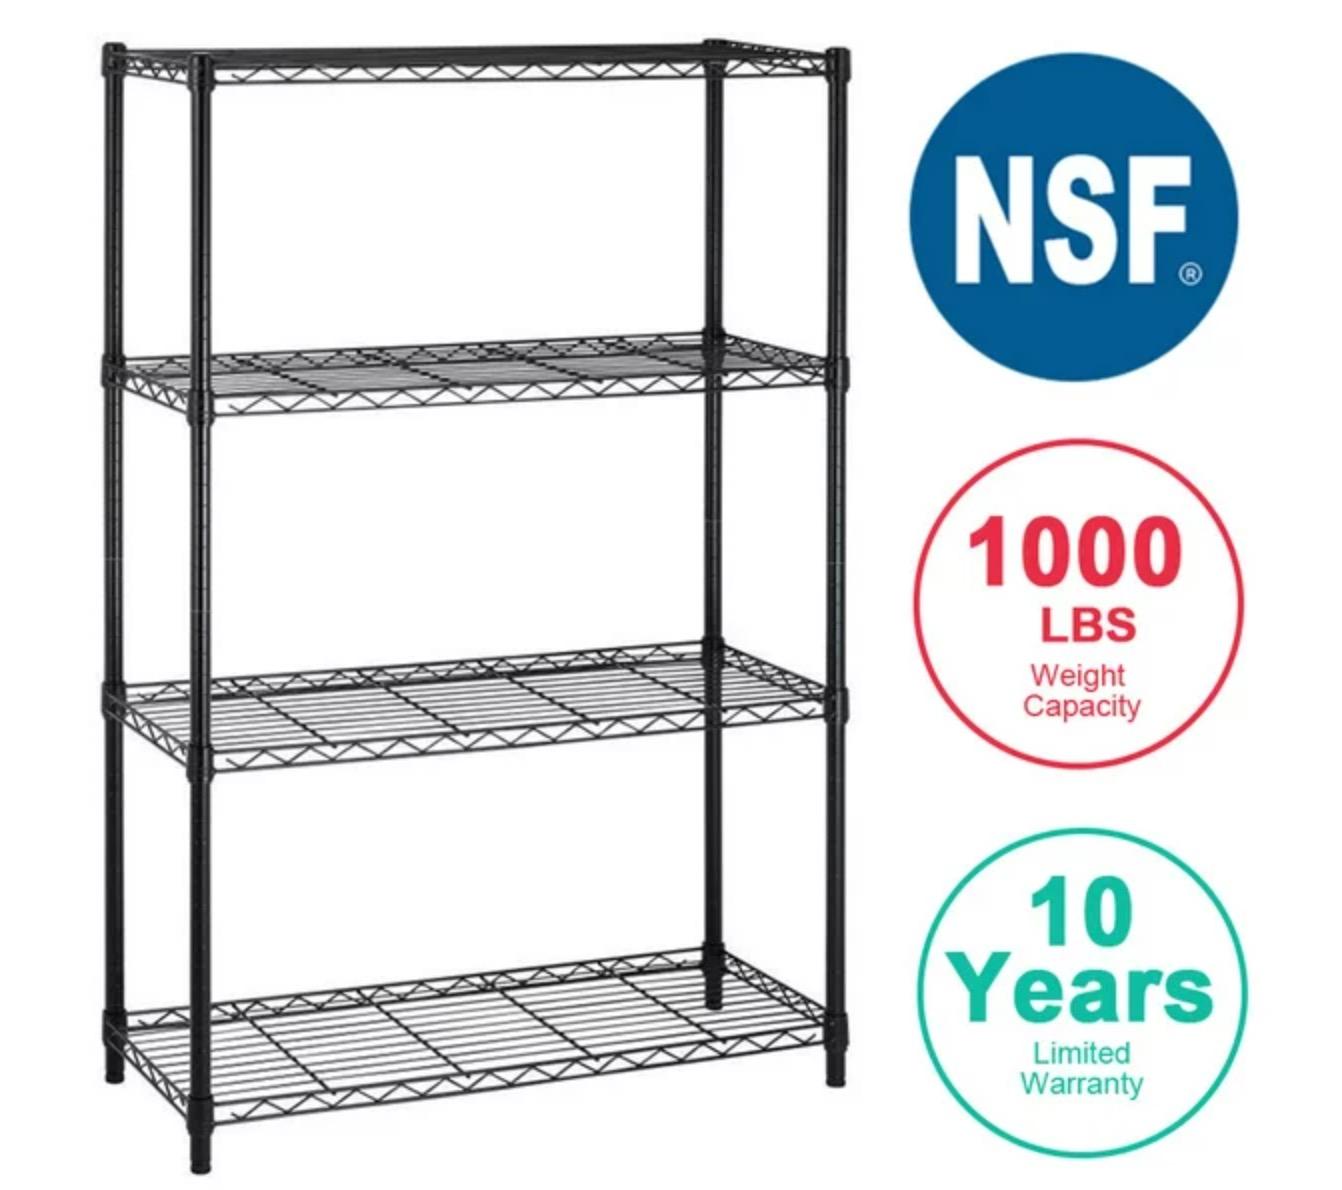 BestOffice 4 Shelf Wire Shelving Unit Storage for $39.99 Shipped